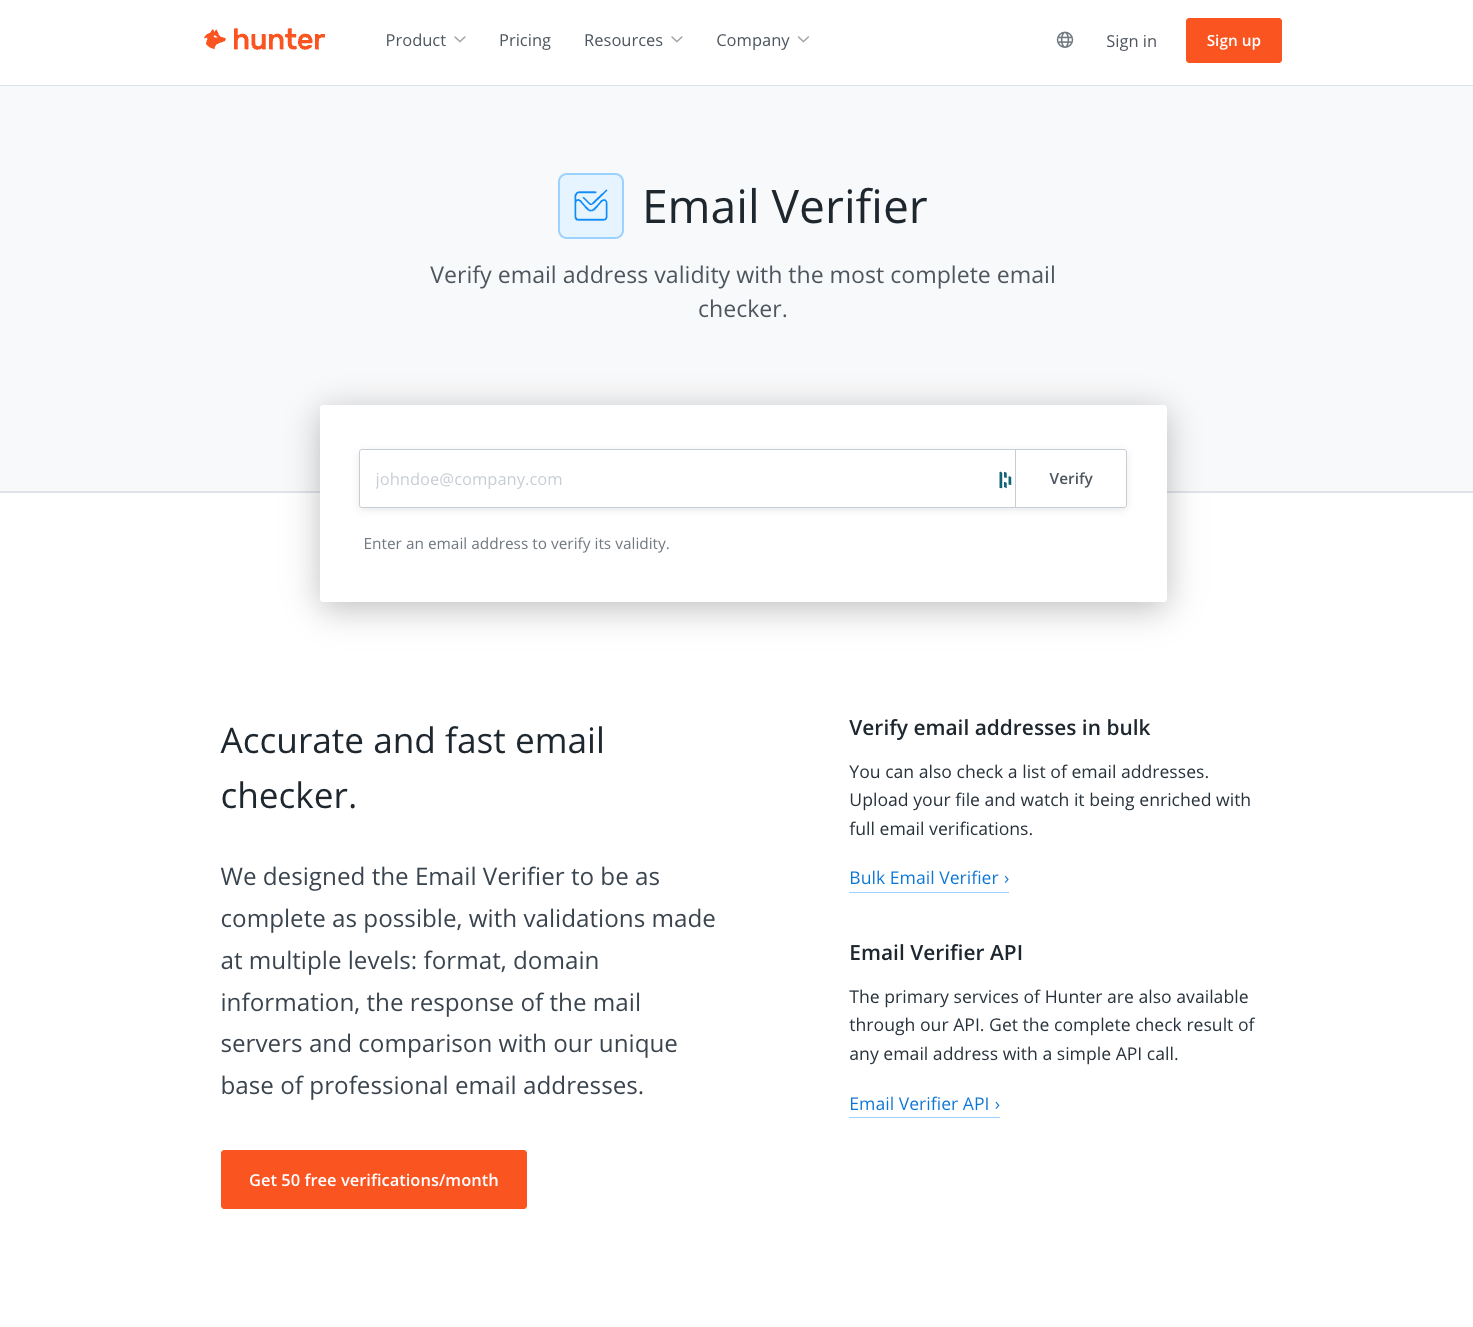 Hunter's Email Verifier